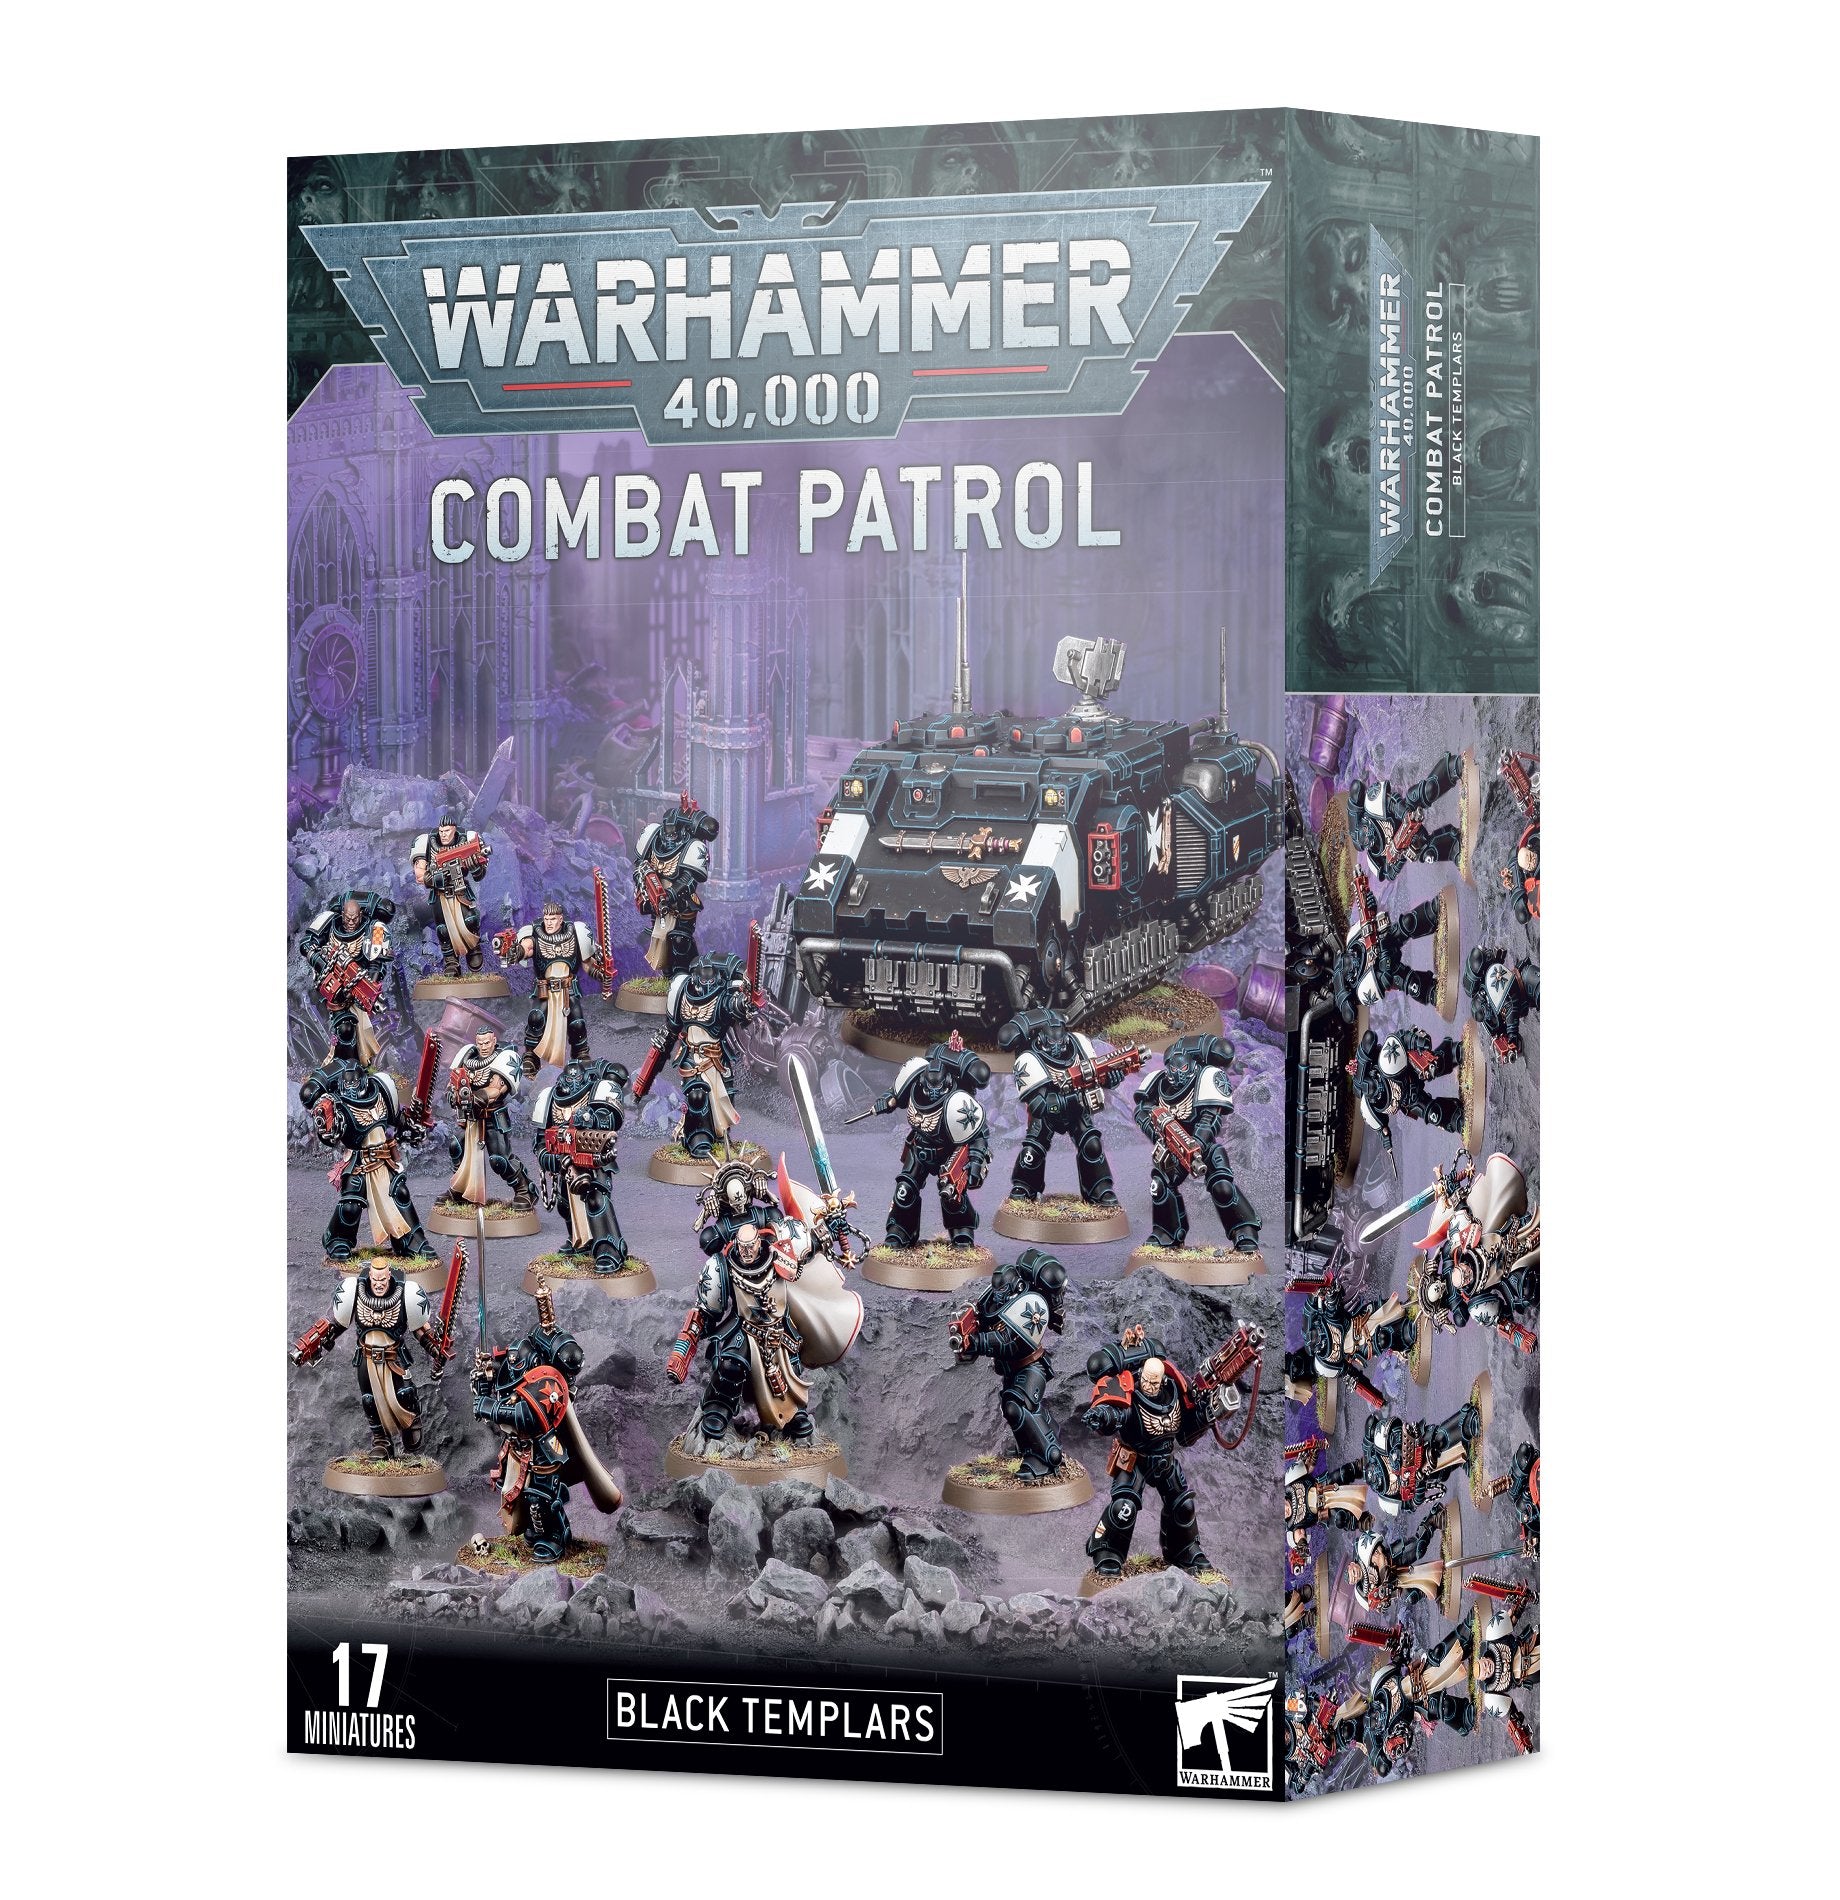 Warhammer 40,000: Black Templars: Combat Patrol